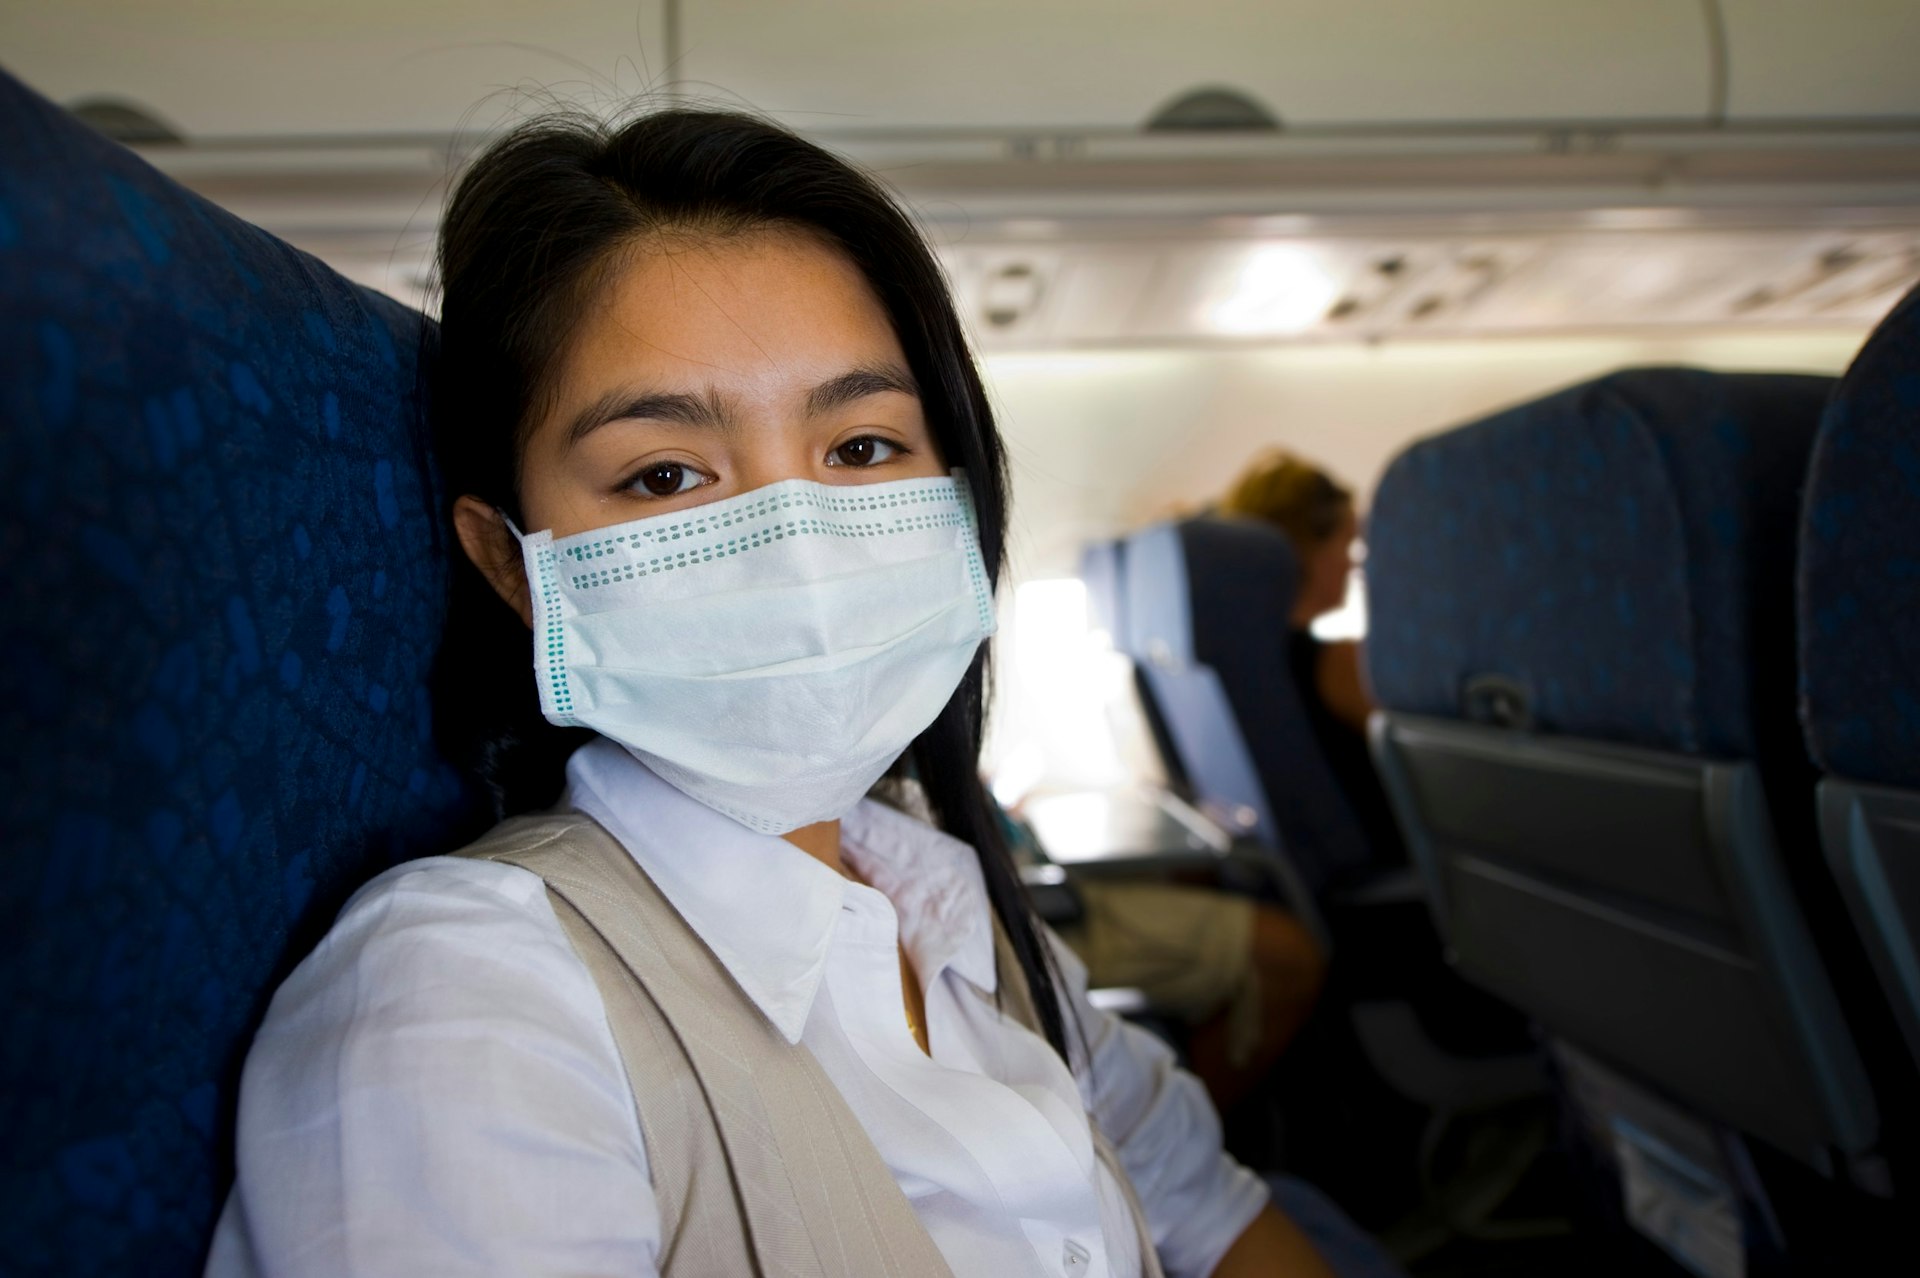 A woman wearing a mask on a plane